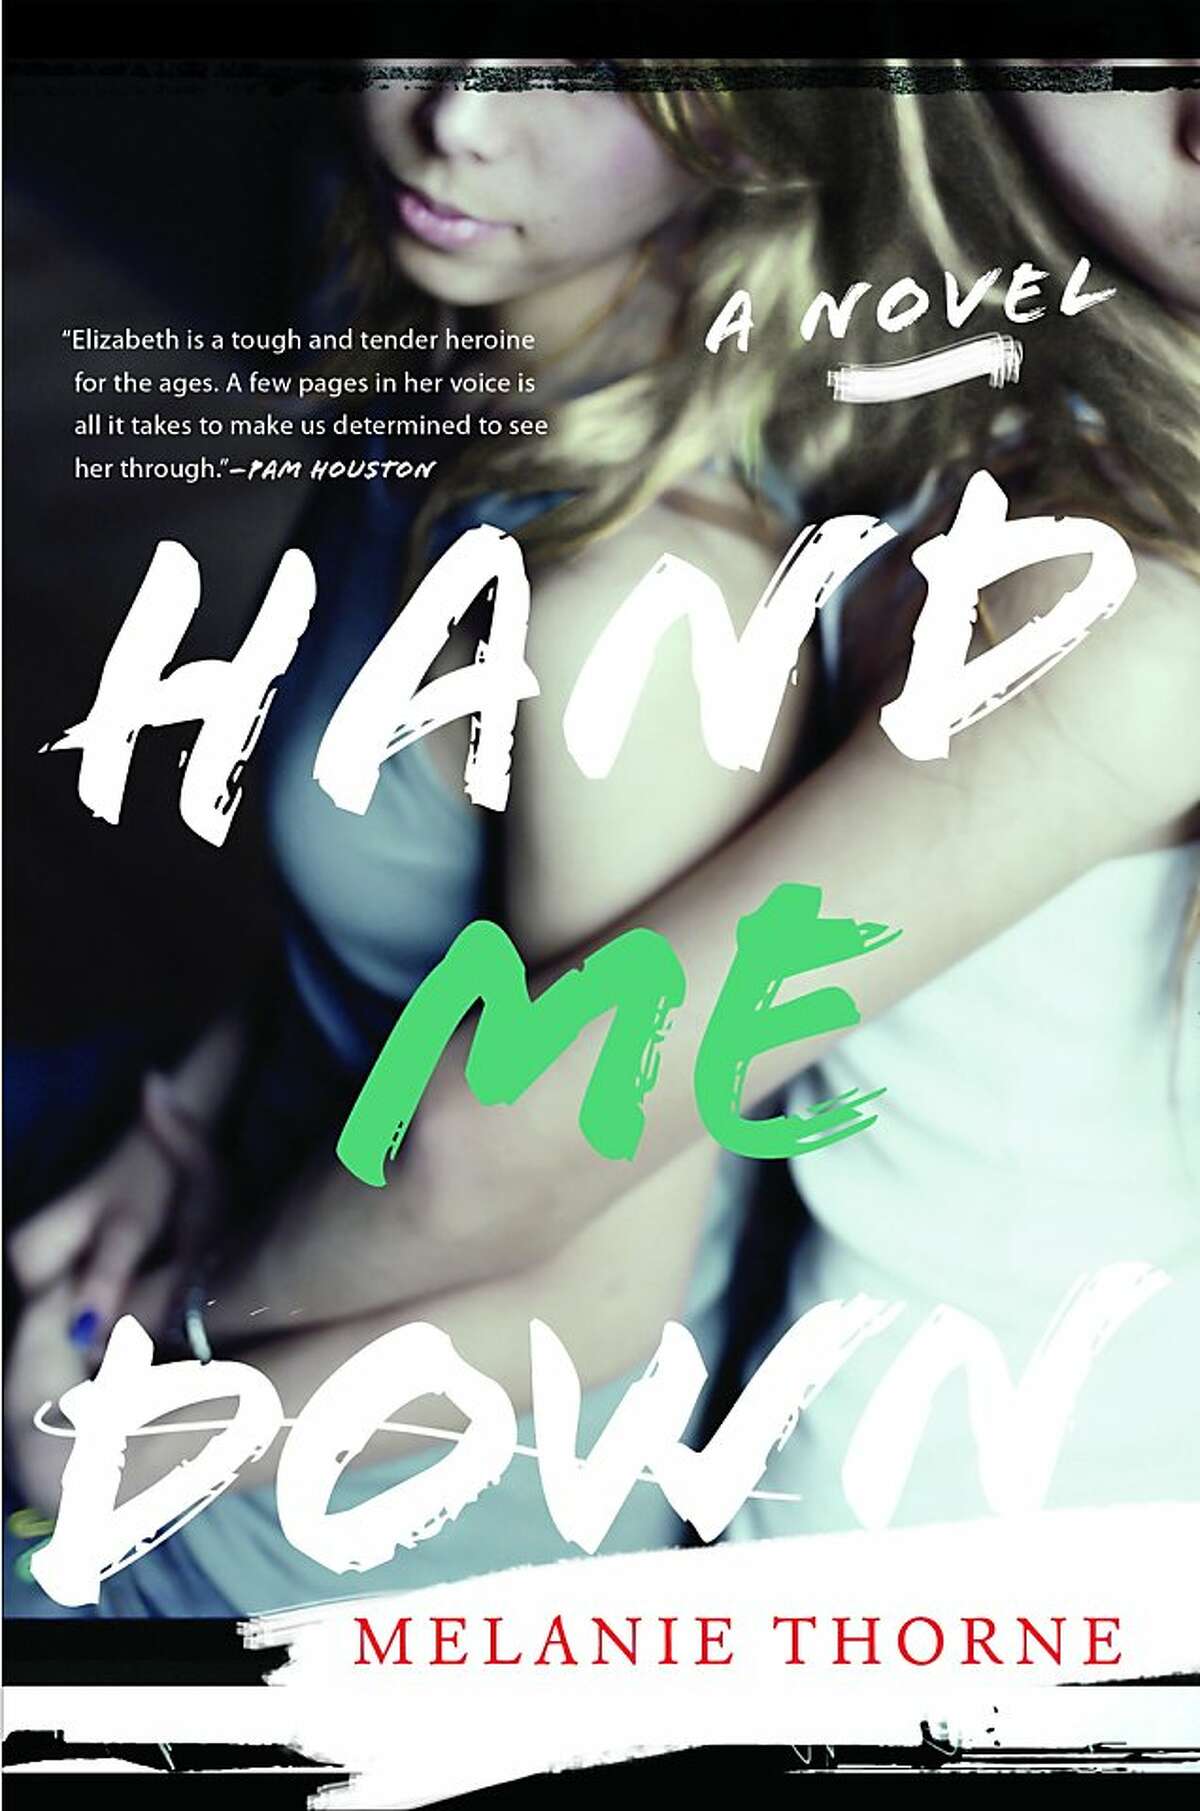 "Hand Me Down," by Melanie Thorne